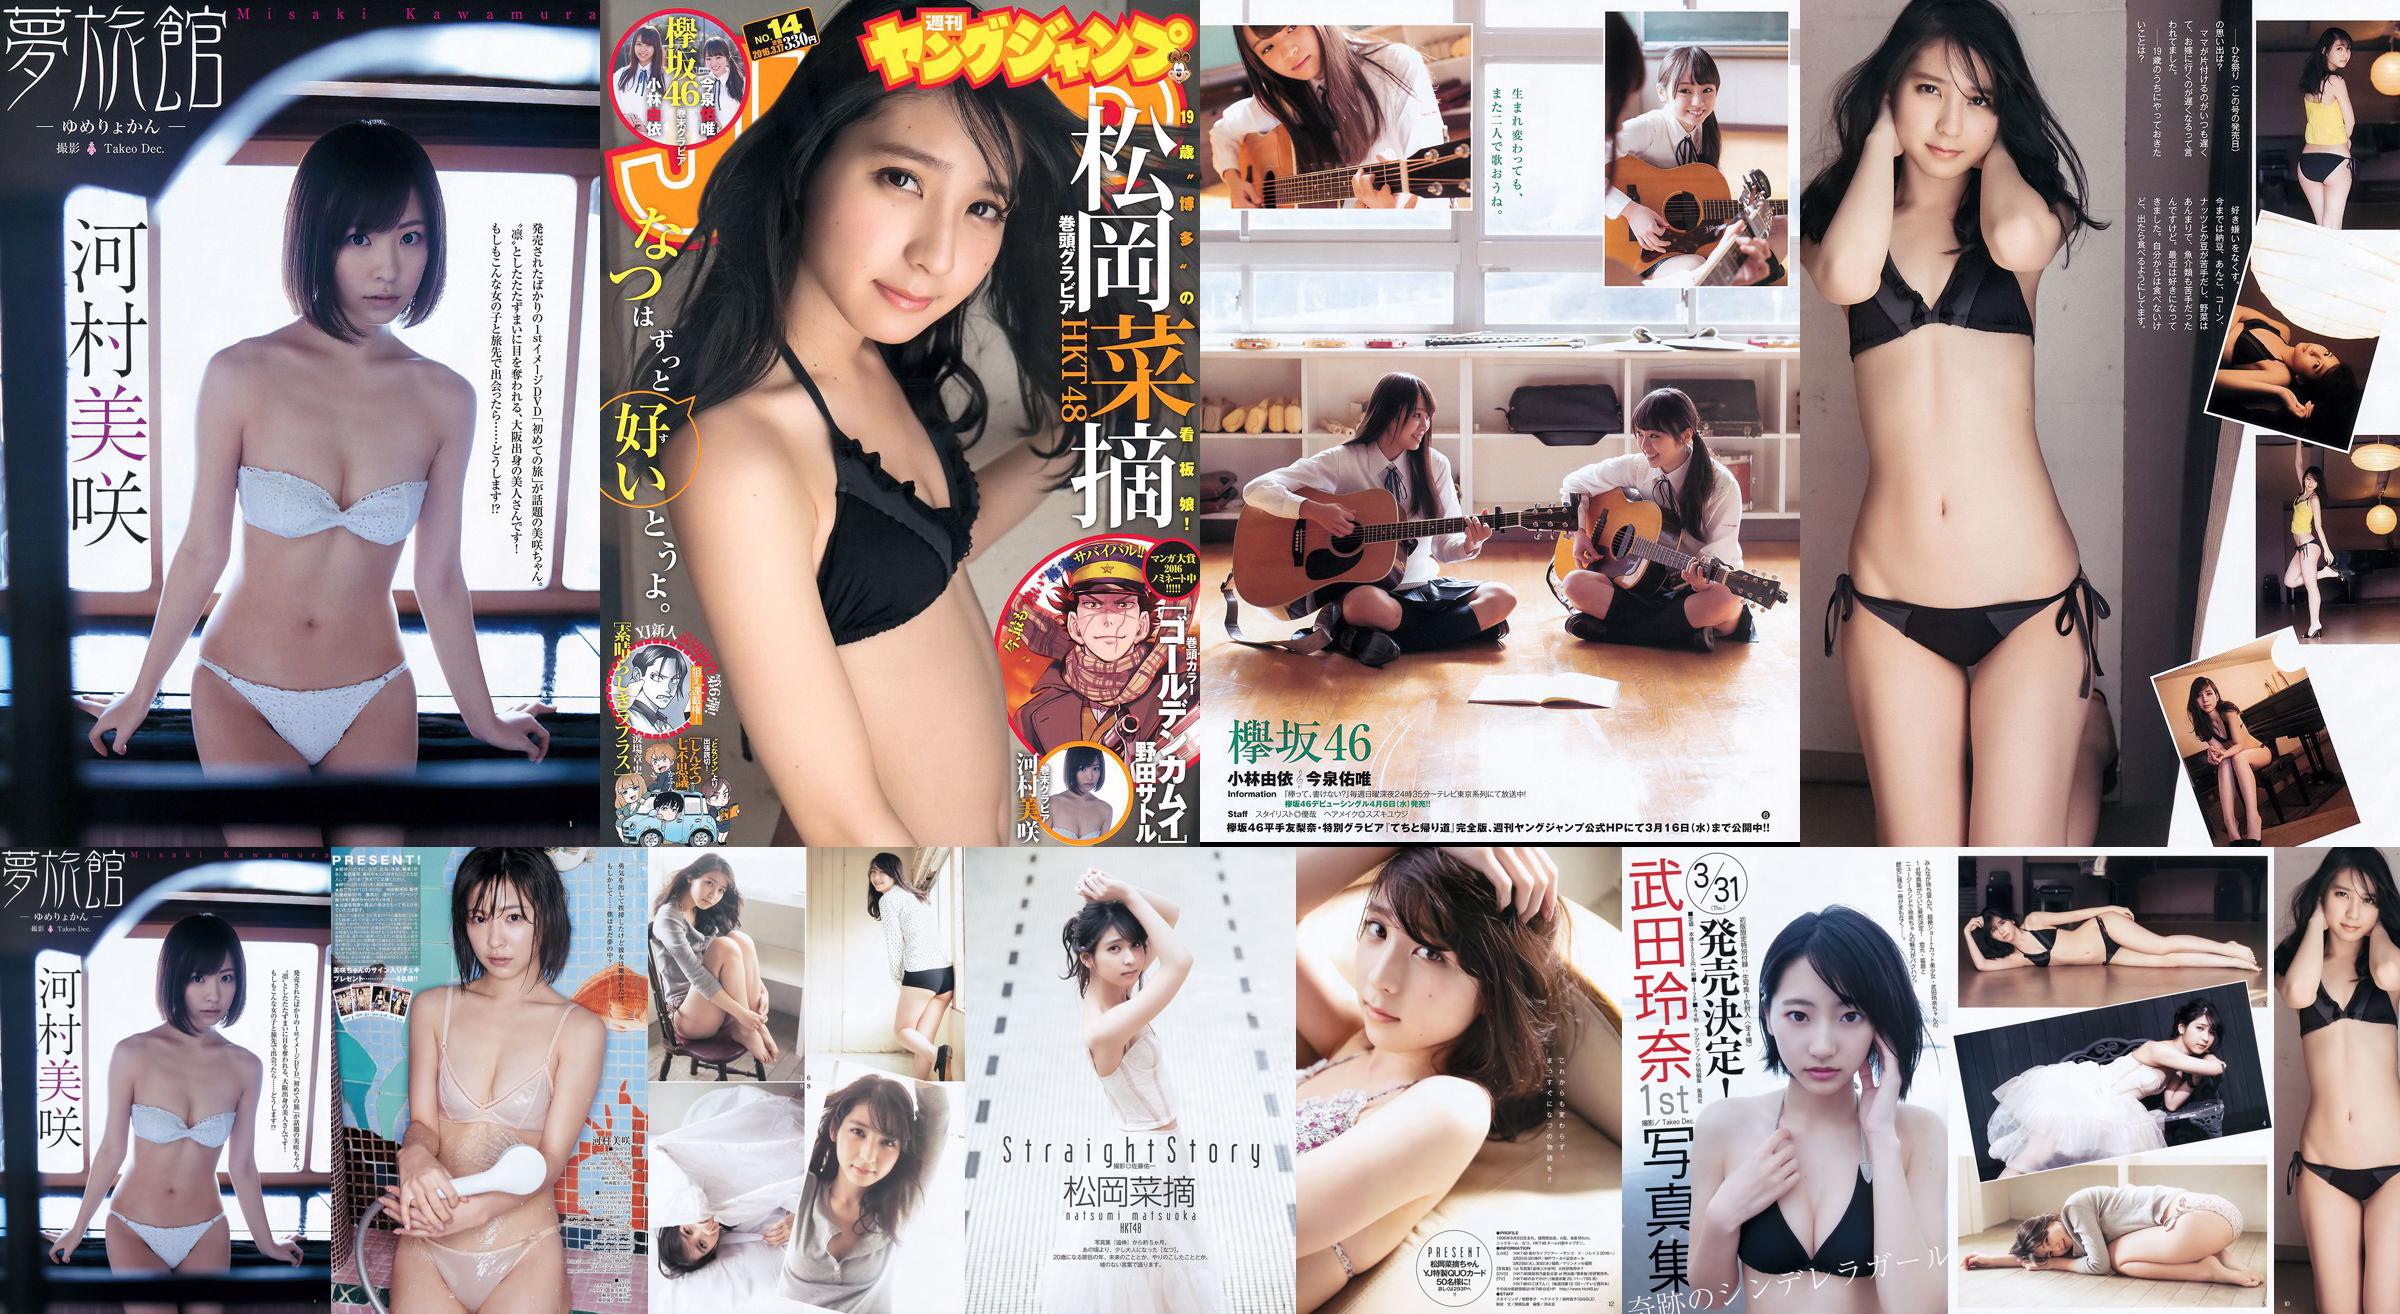 Selecciones de vegetales de Muraoka Yui Kobayashi Yui Imaizumi Misaki Kawamura [Salto joven semanal] Revista fotográfica n. ° 14 de 2016 No.9f755d Página 2